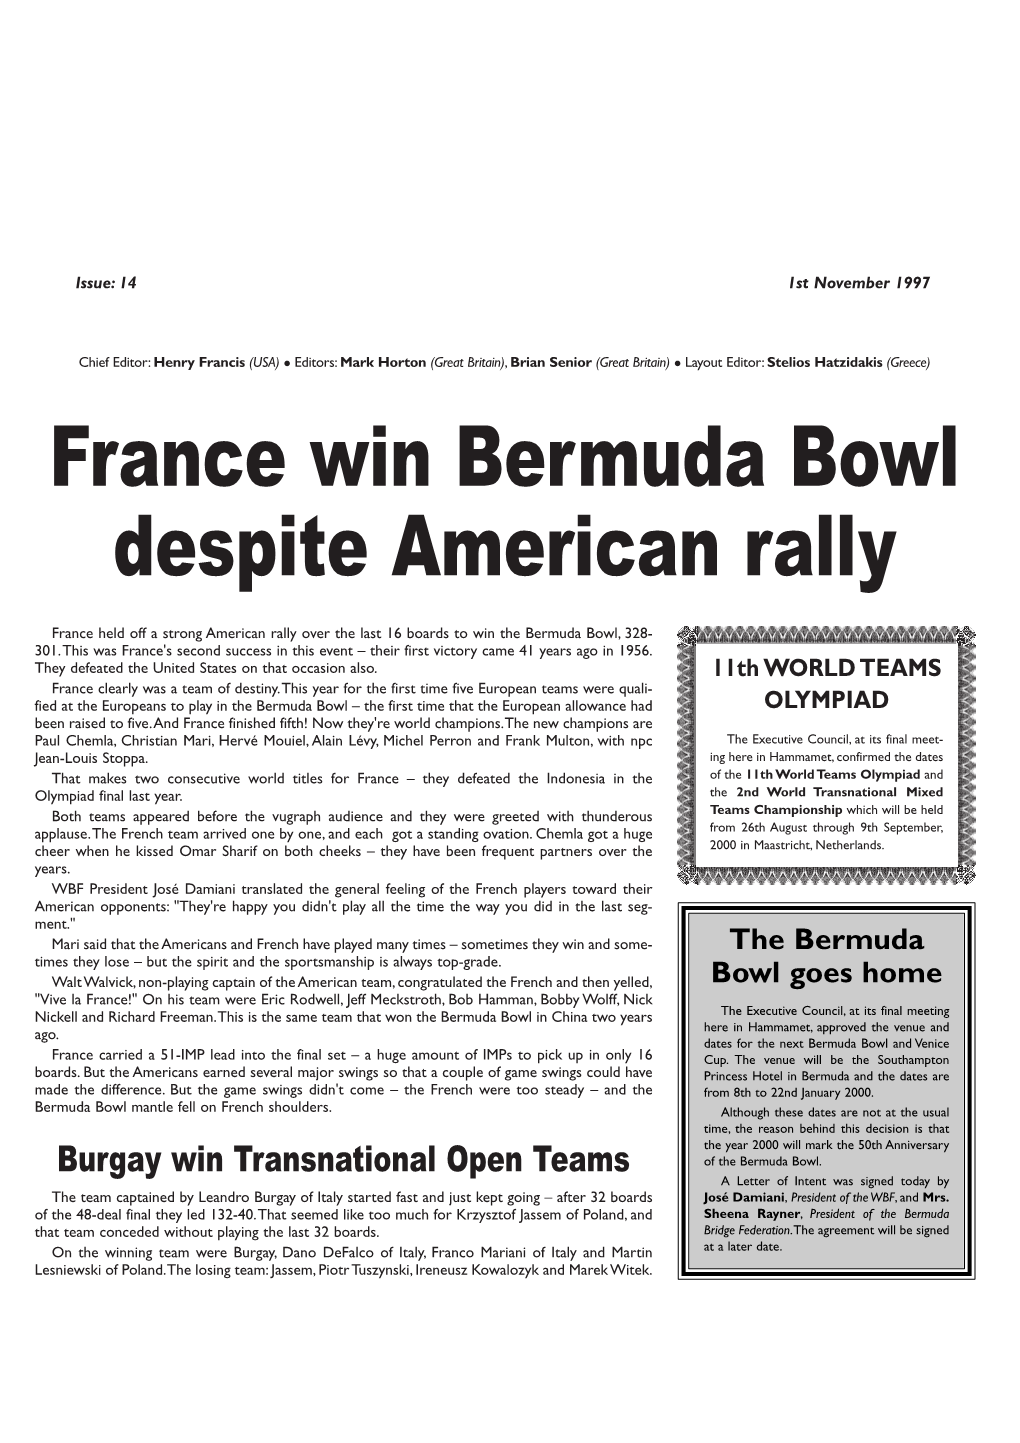 France Win Bermuda Bowl Despite American Rally